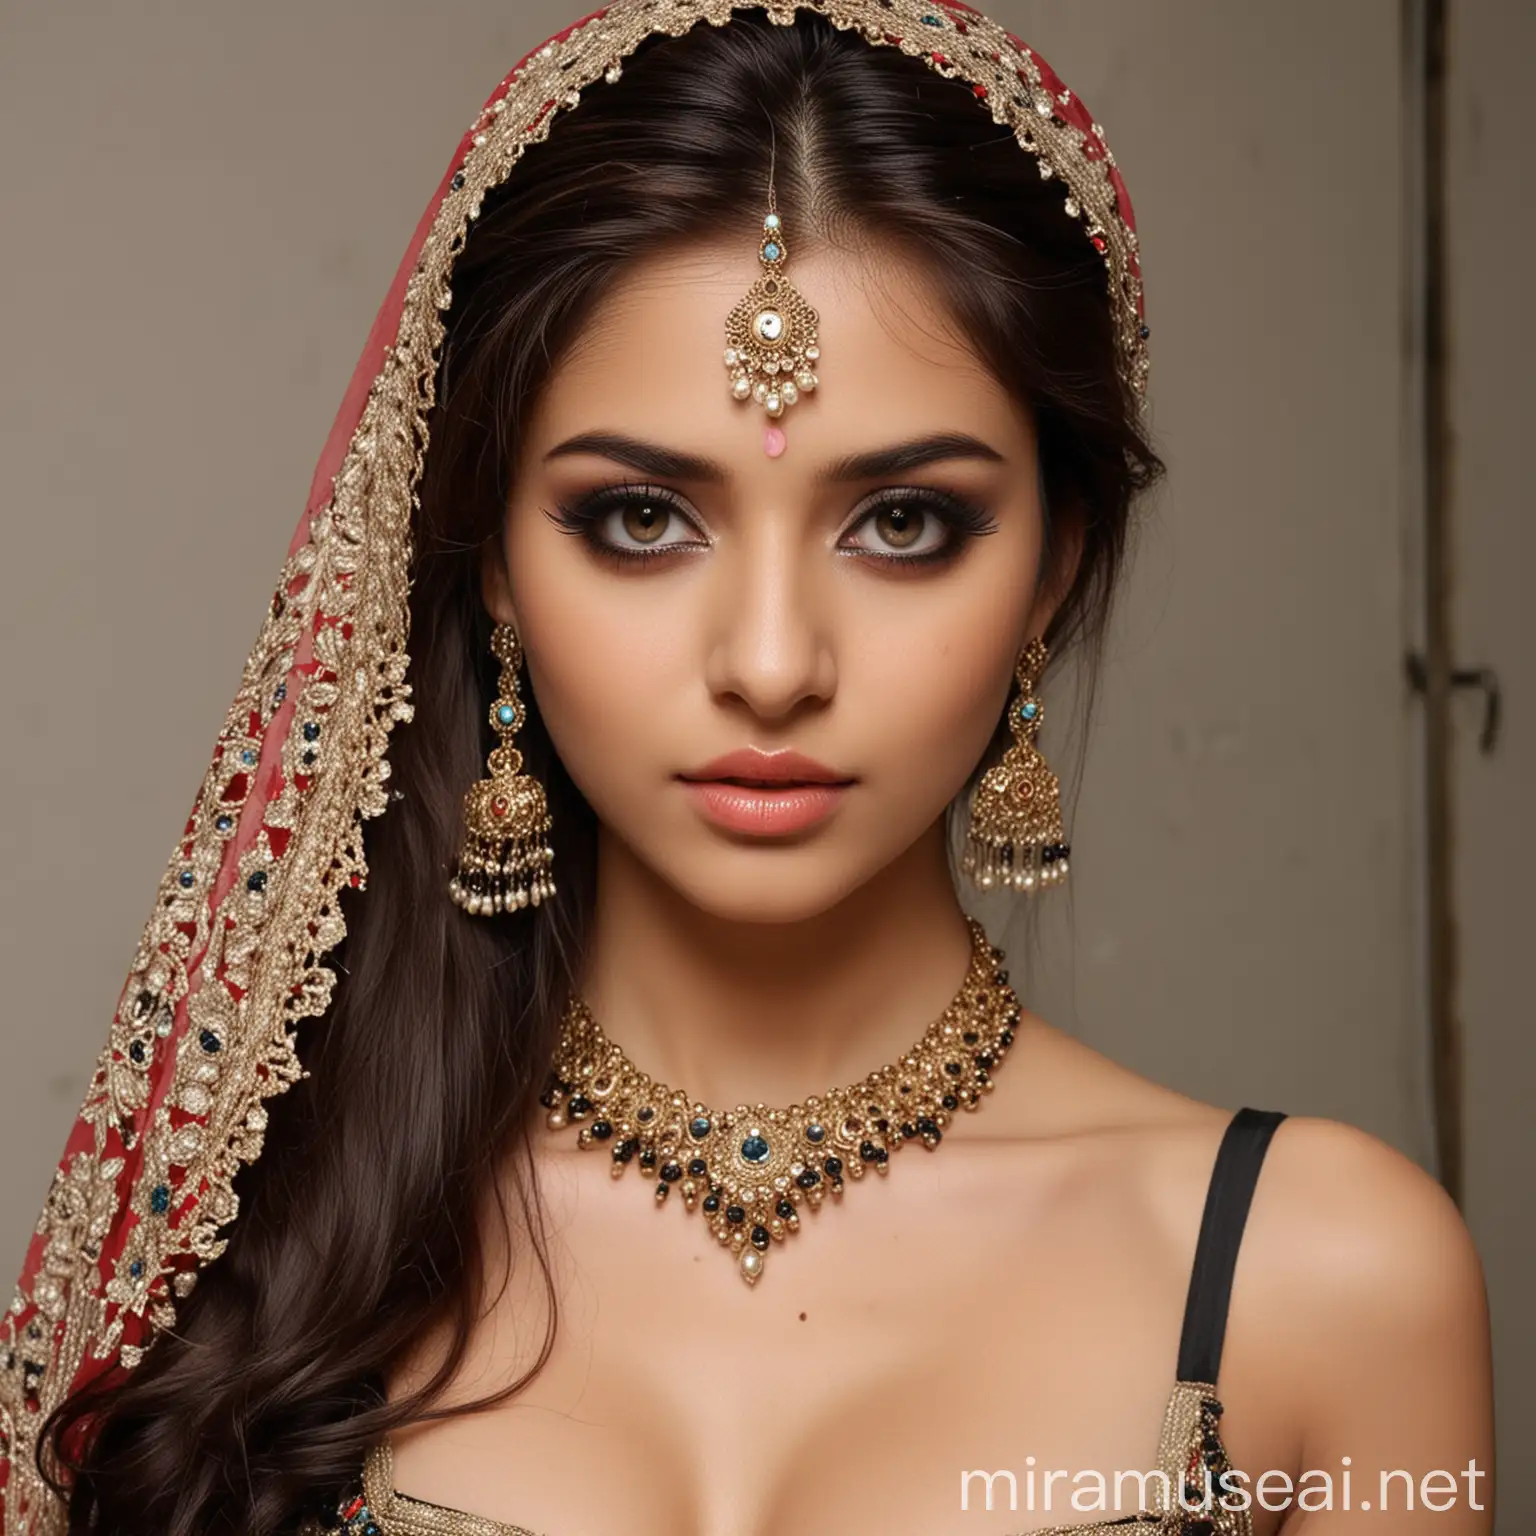 Pakistani model girl,,extreme beautiful,,extreme cute,,face facing the camera,,Indian makeup,,bra